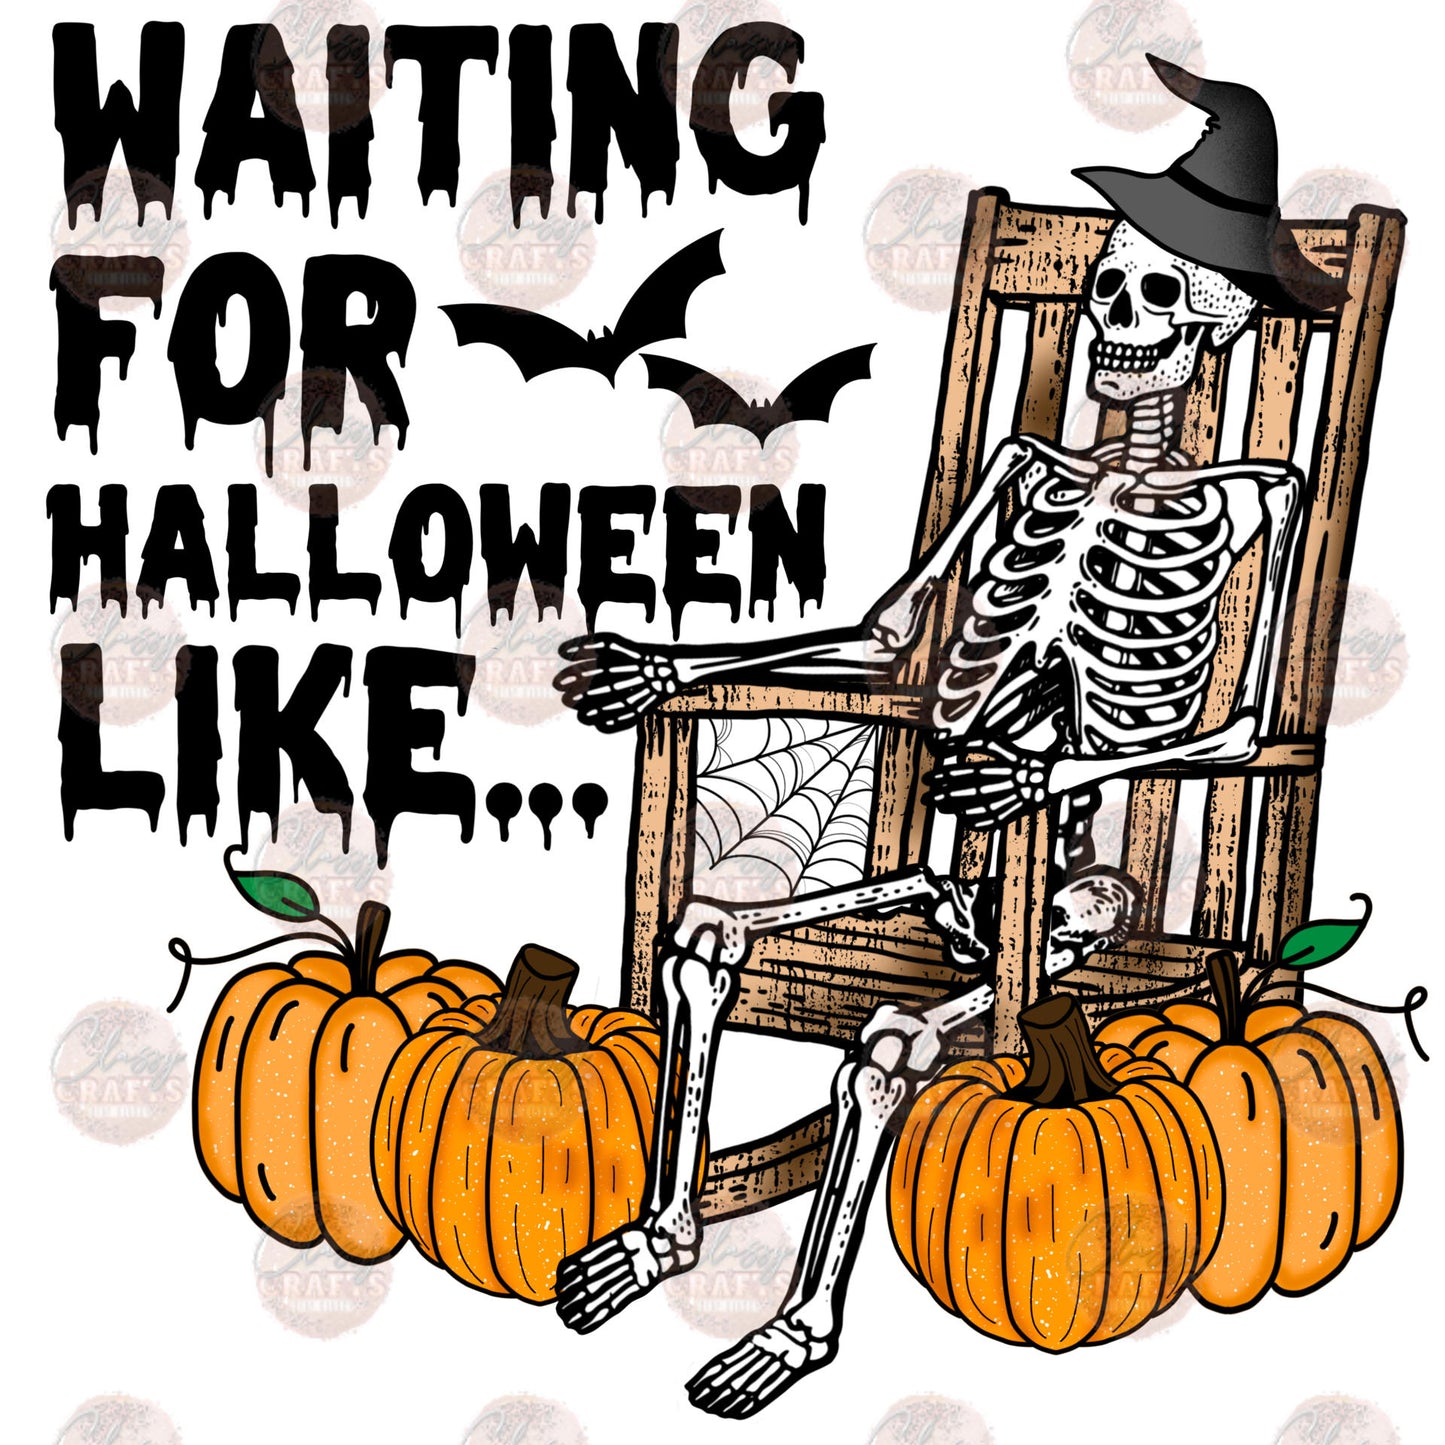 Waiting for Halloween Like...Transfer